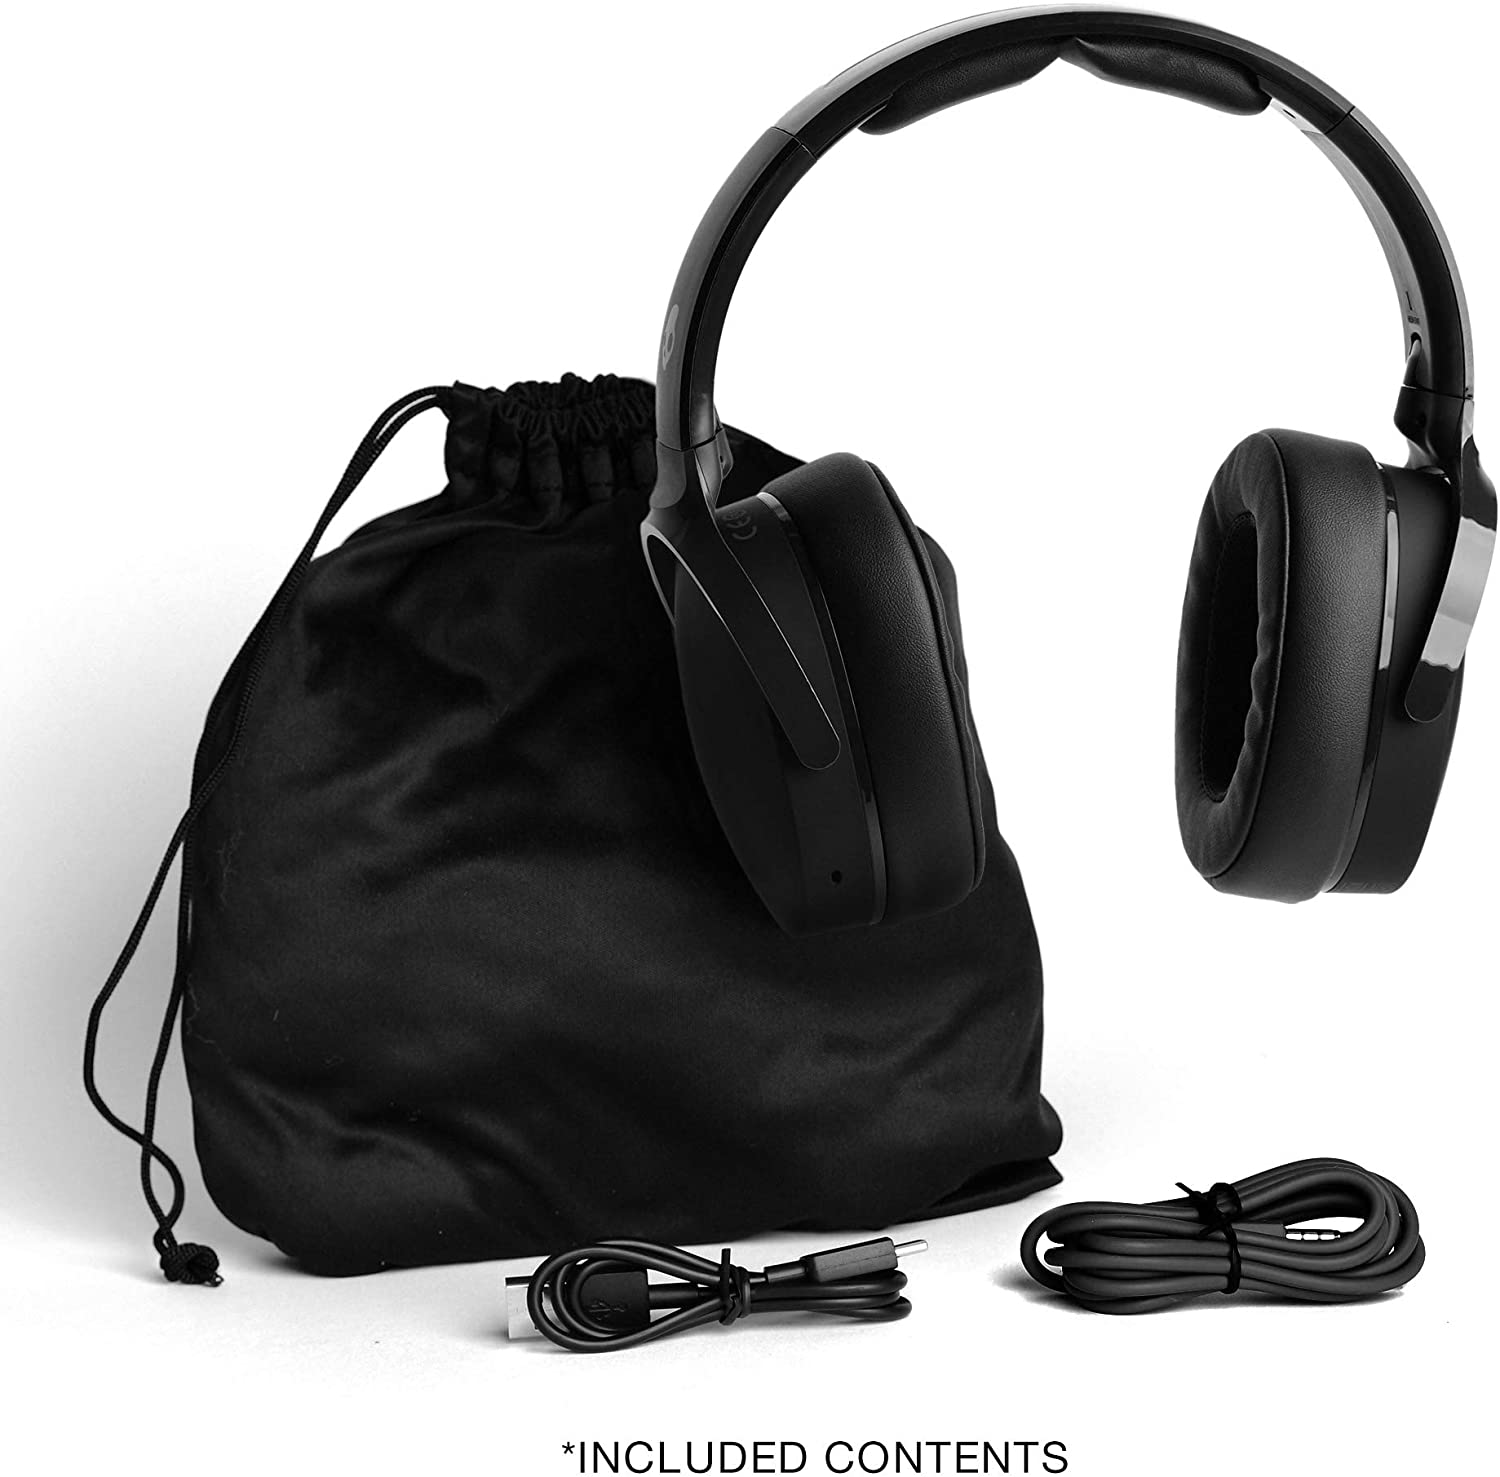 Skullcandy Hesh Evo Wireless Over-Ear Bluetooth Headphones